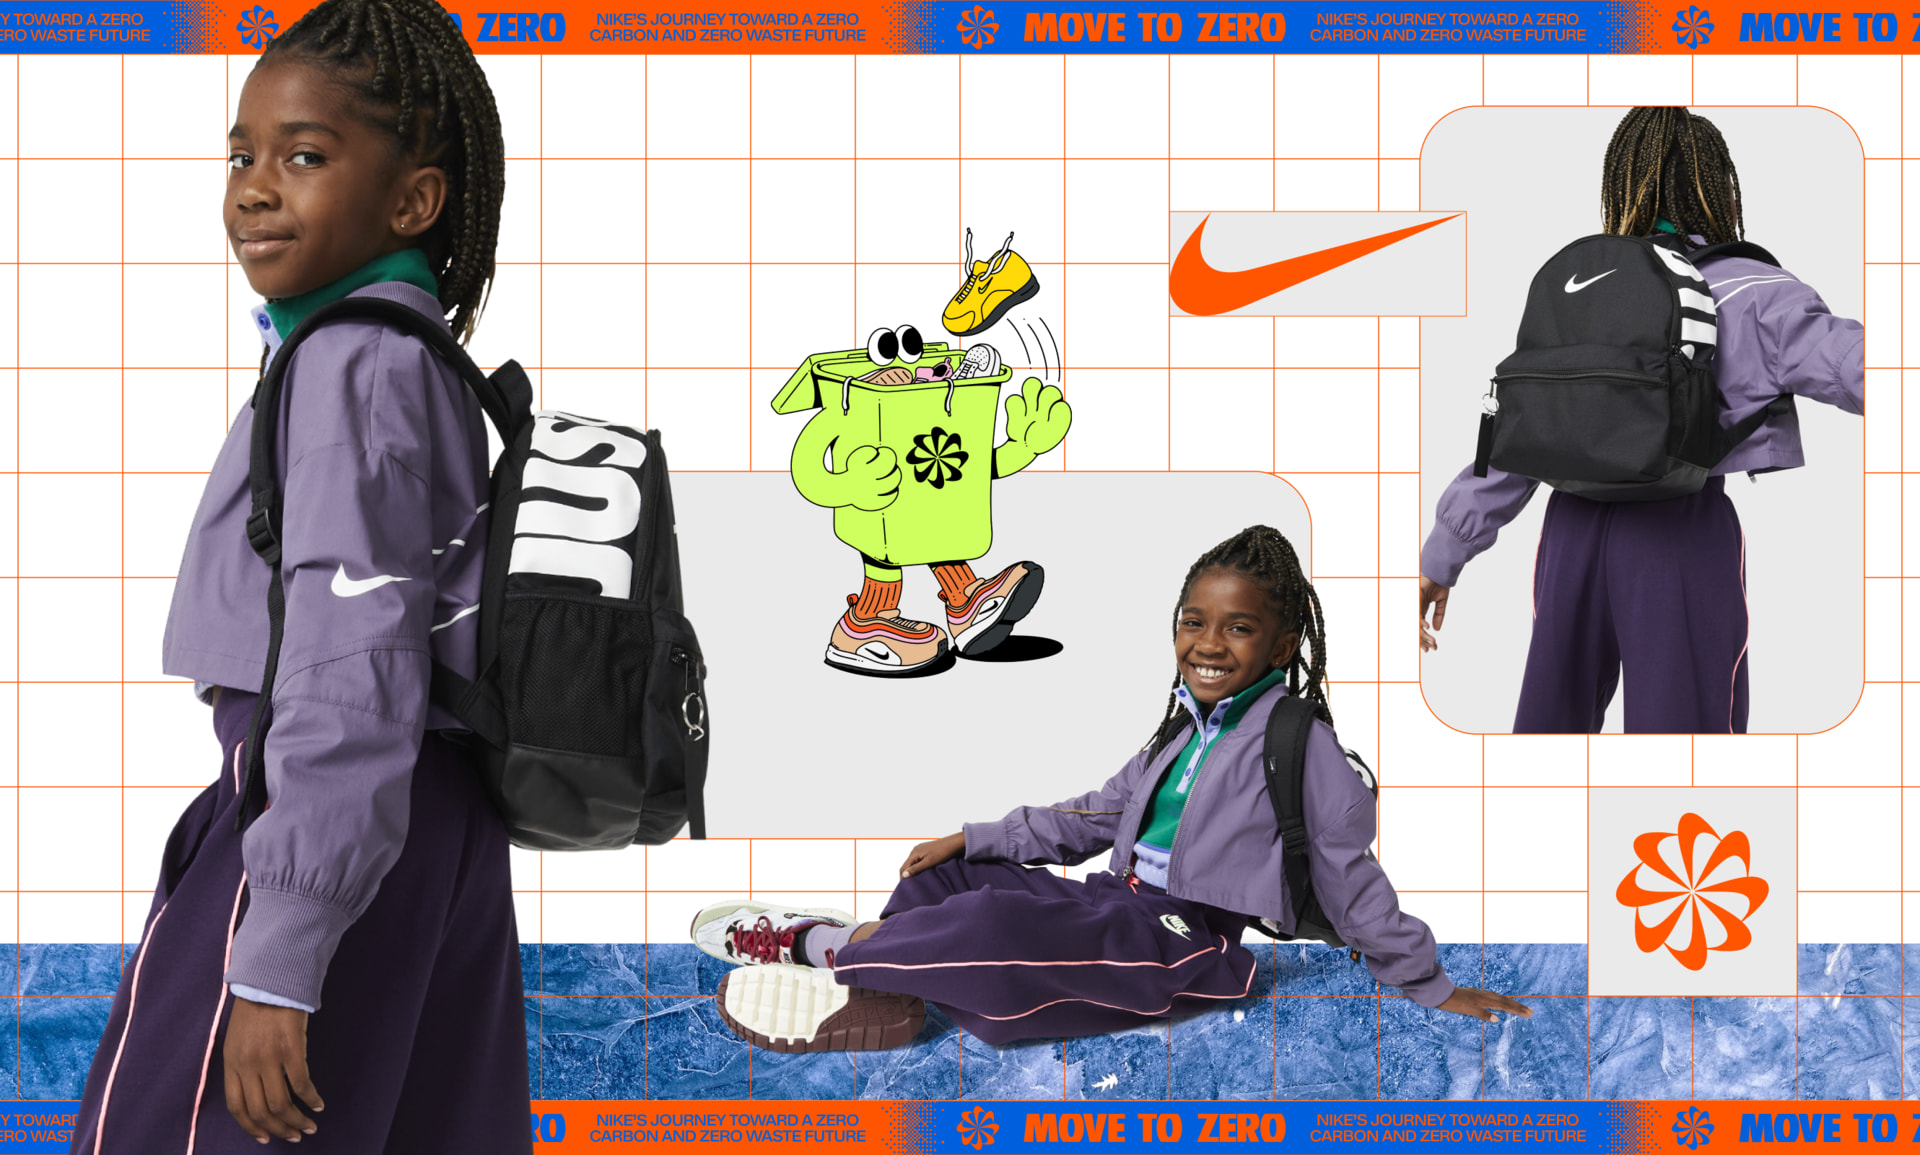 Nike Brasilia JDI Kids' Mini Backpack (11L). Nike IN